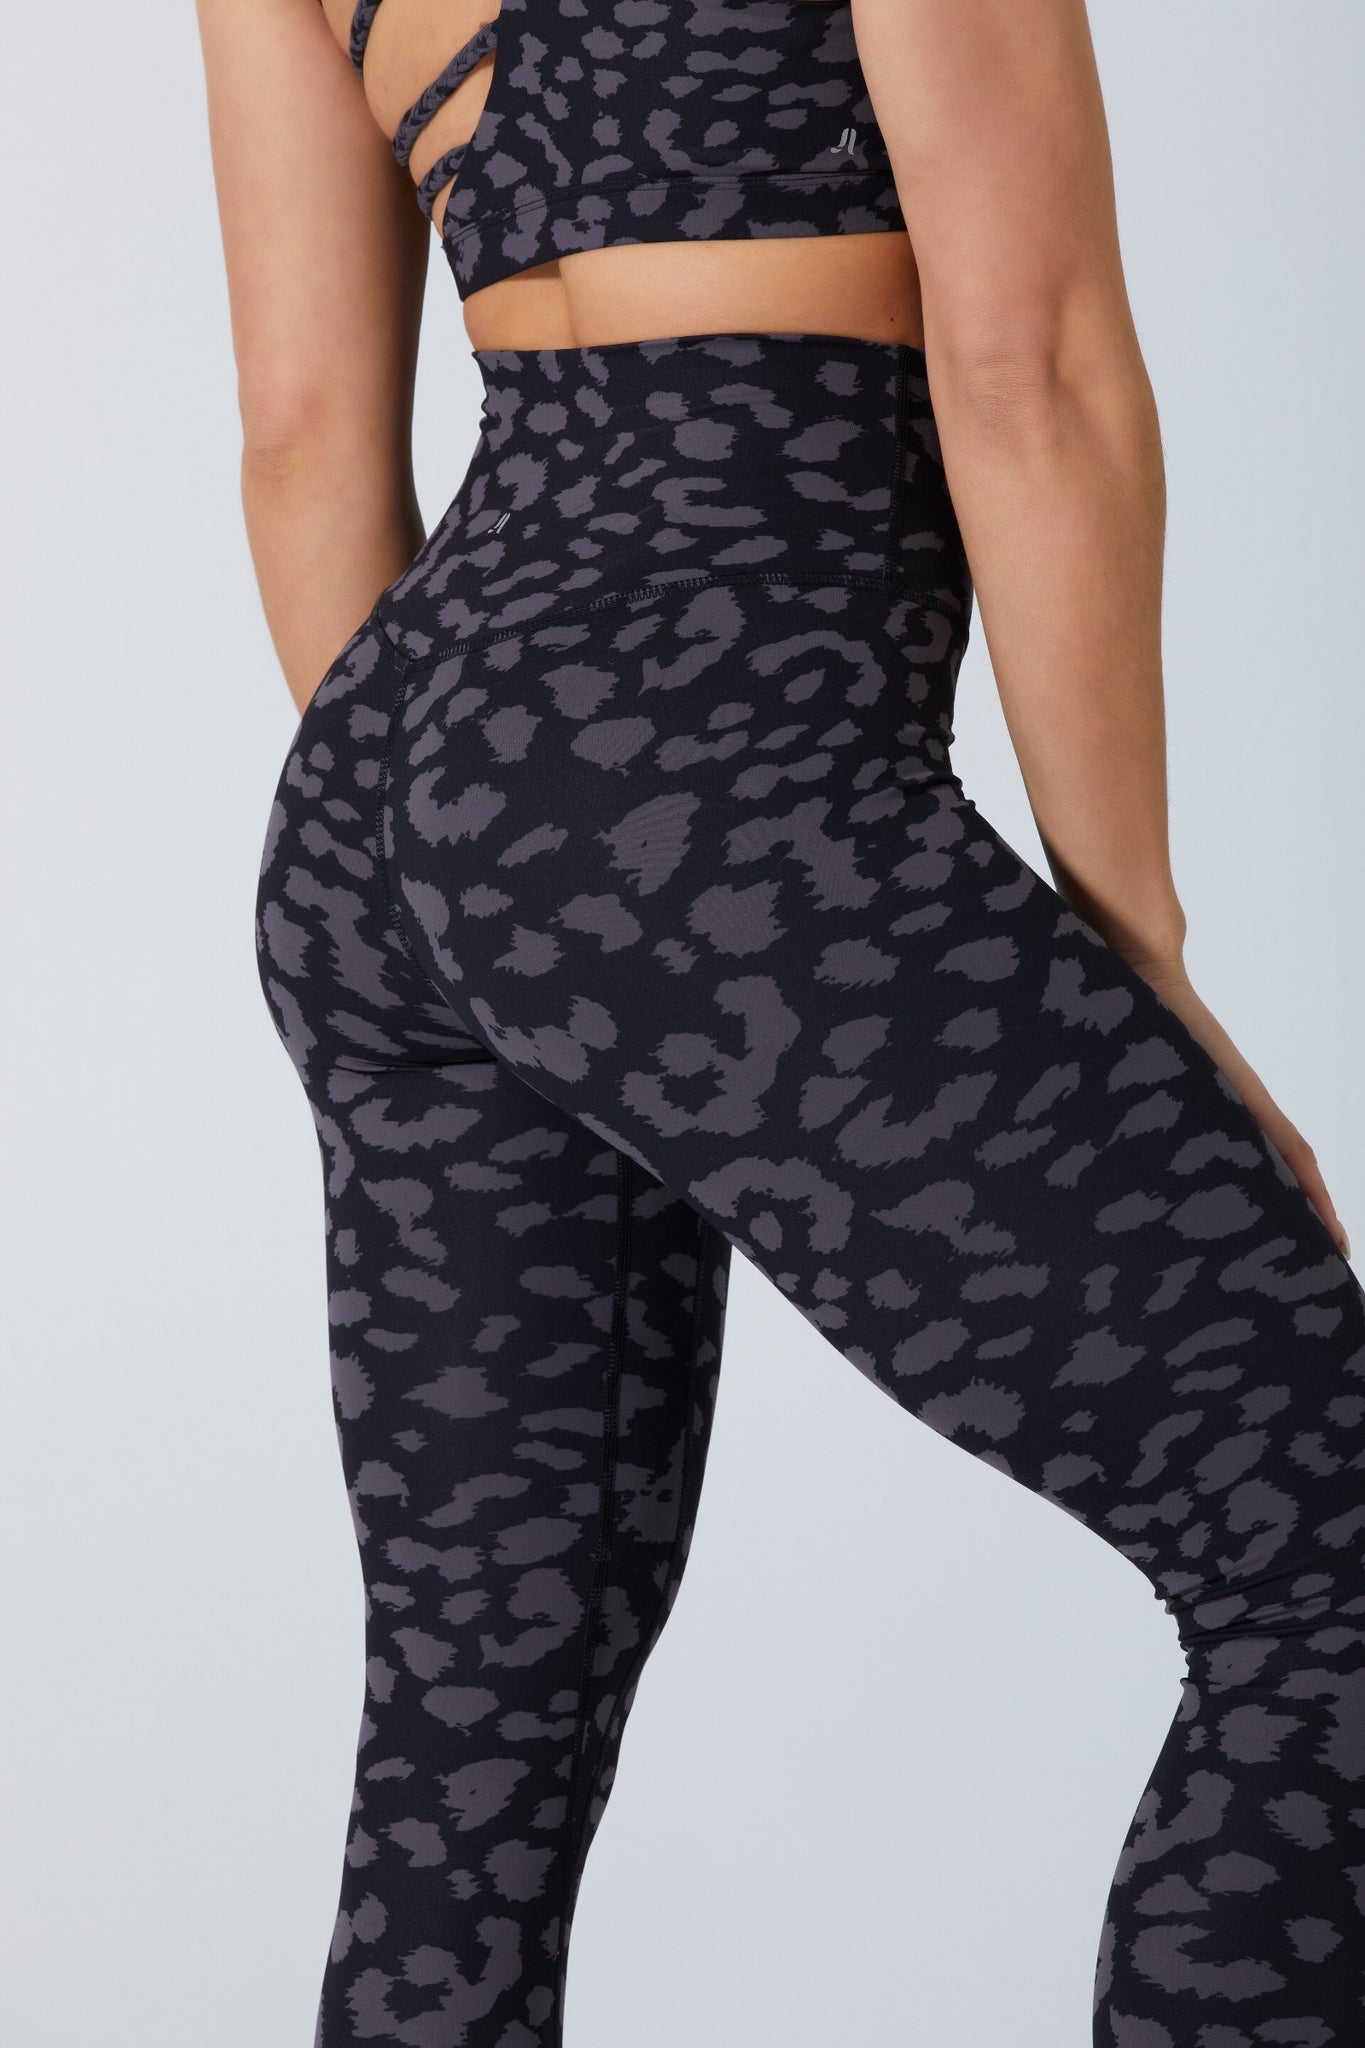 Bally Total Fitness Women's Leopard Mash Pocket Le